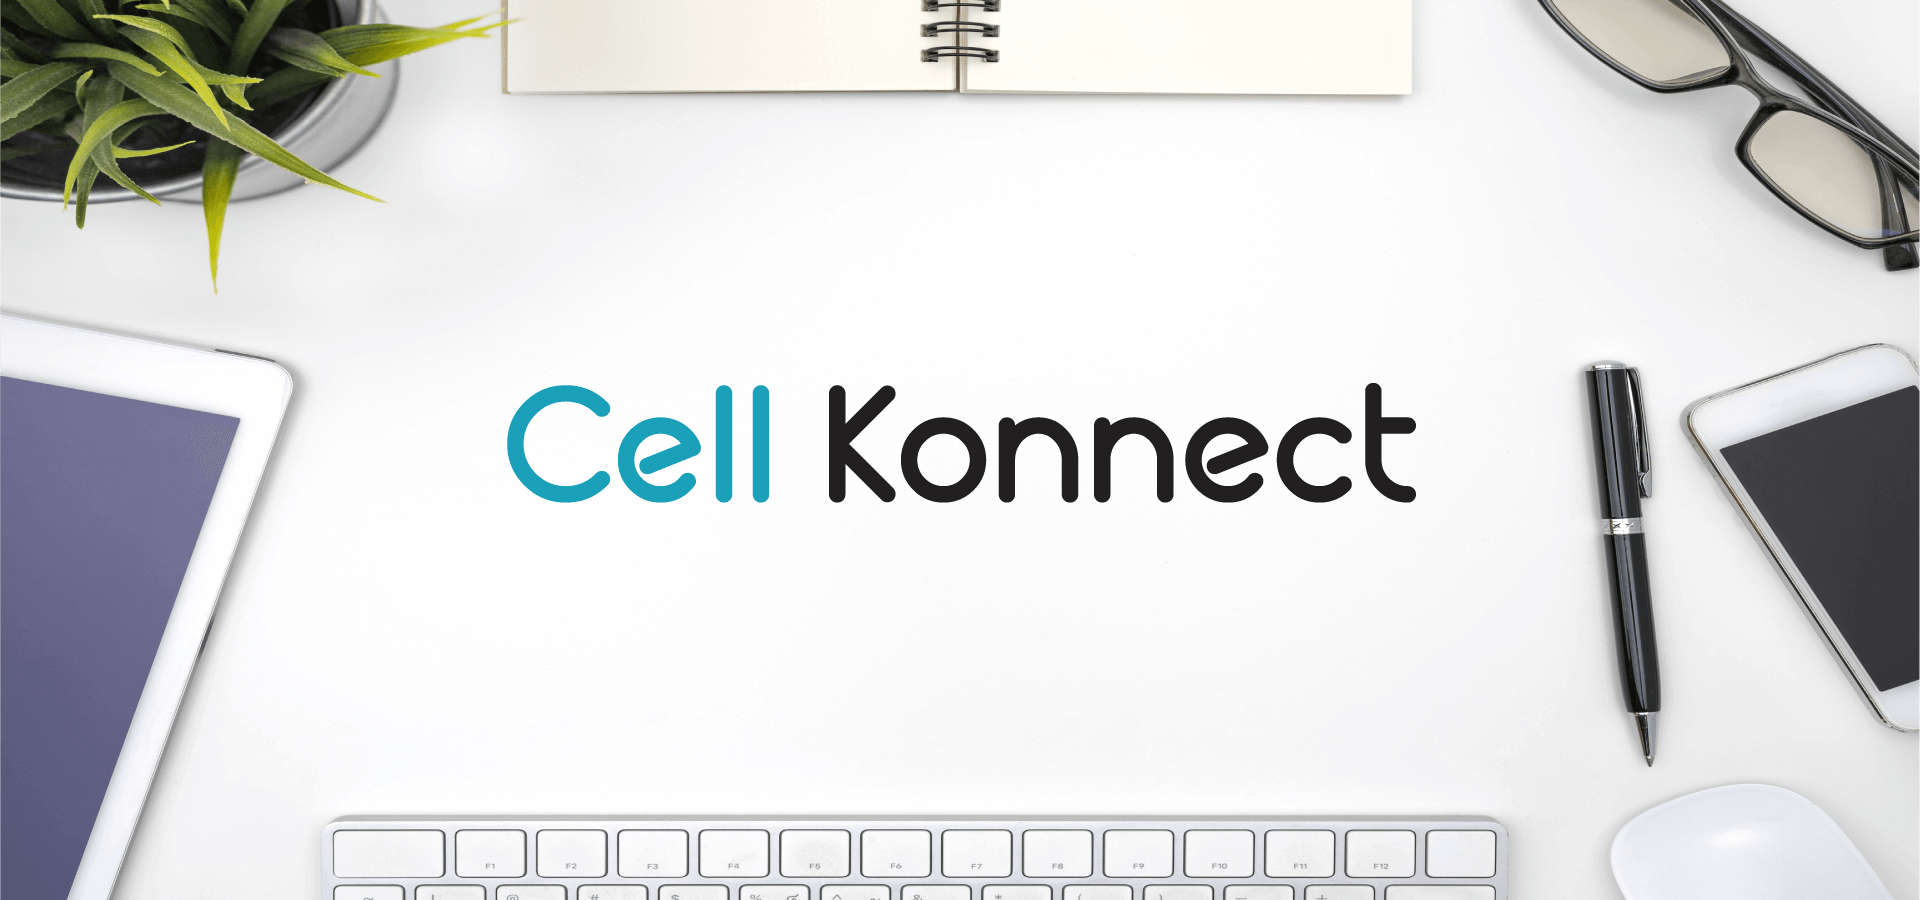 Ecommerce Development for Cell Konnect